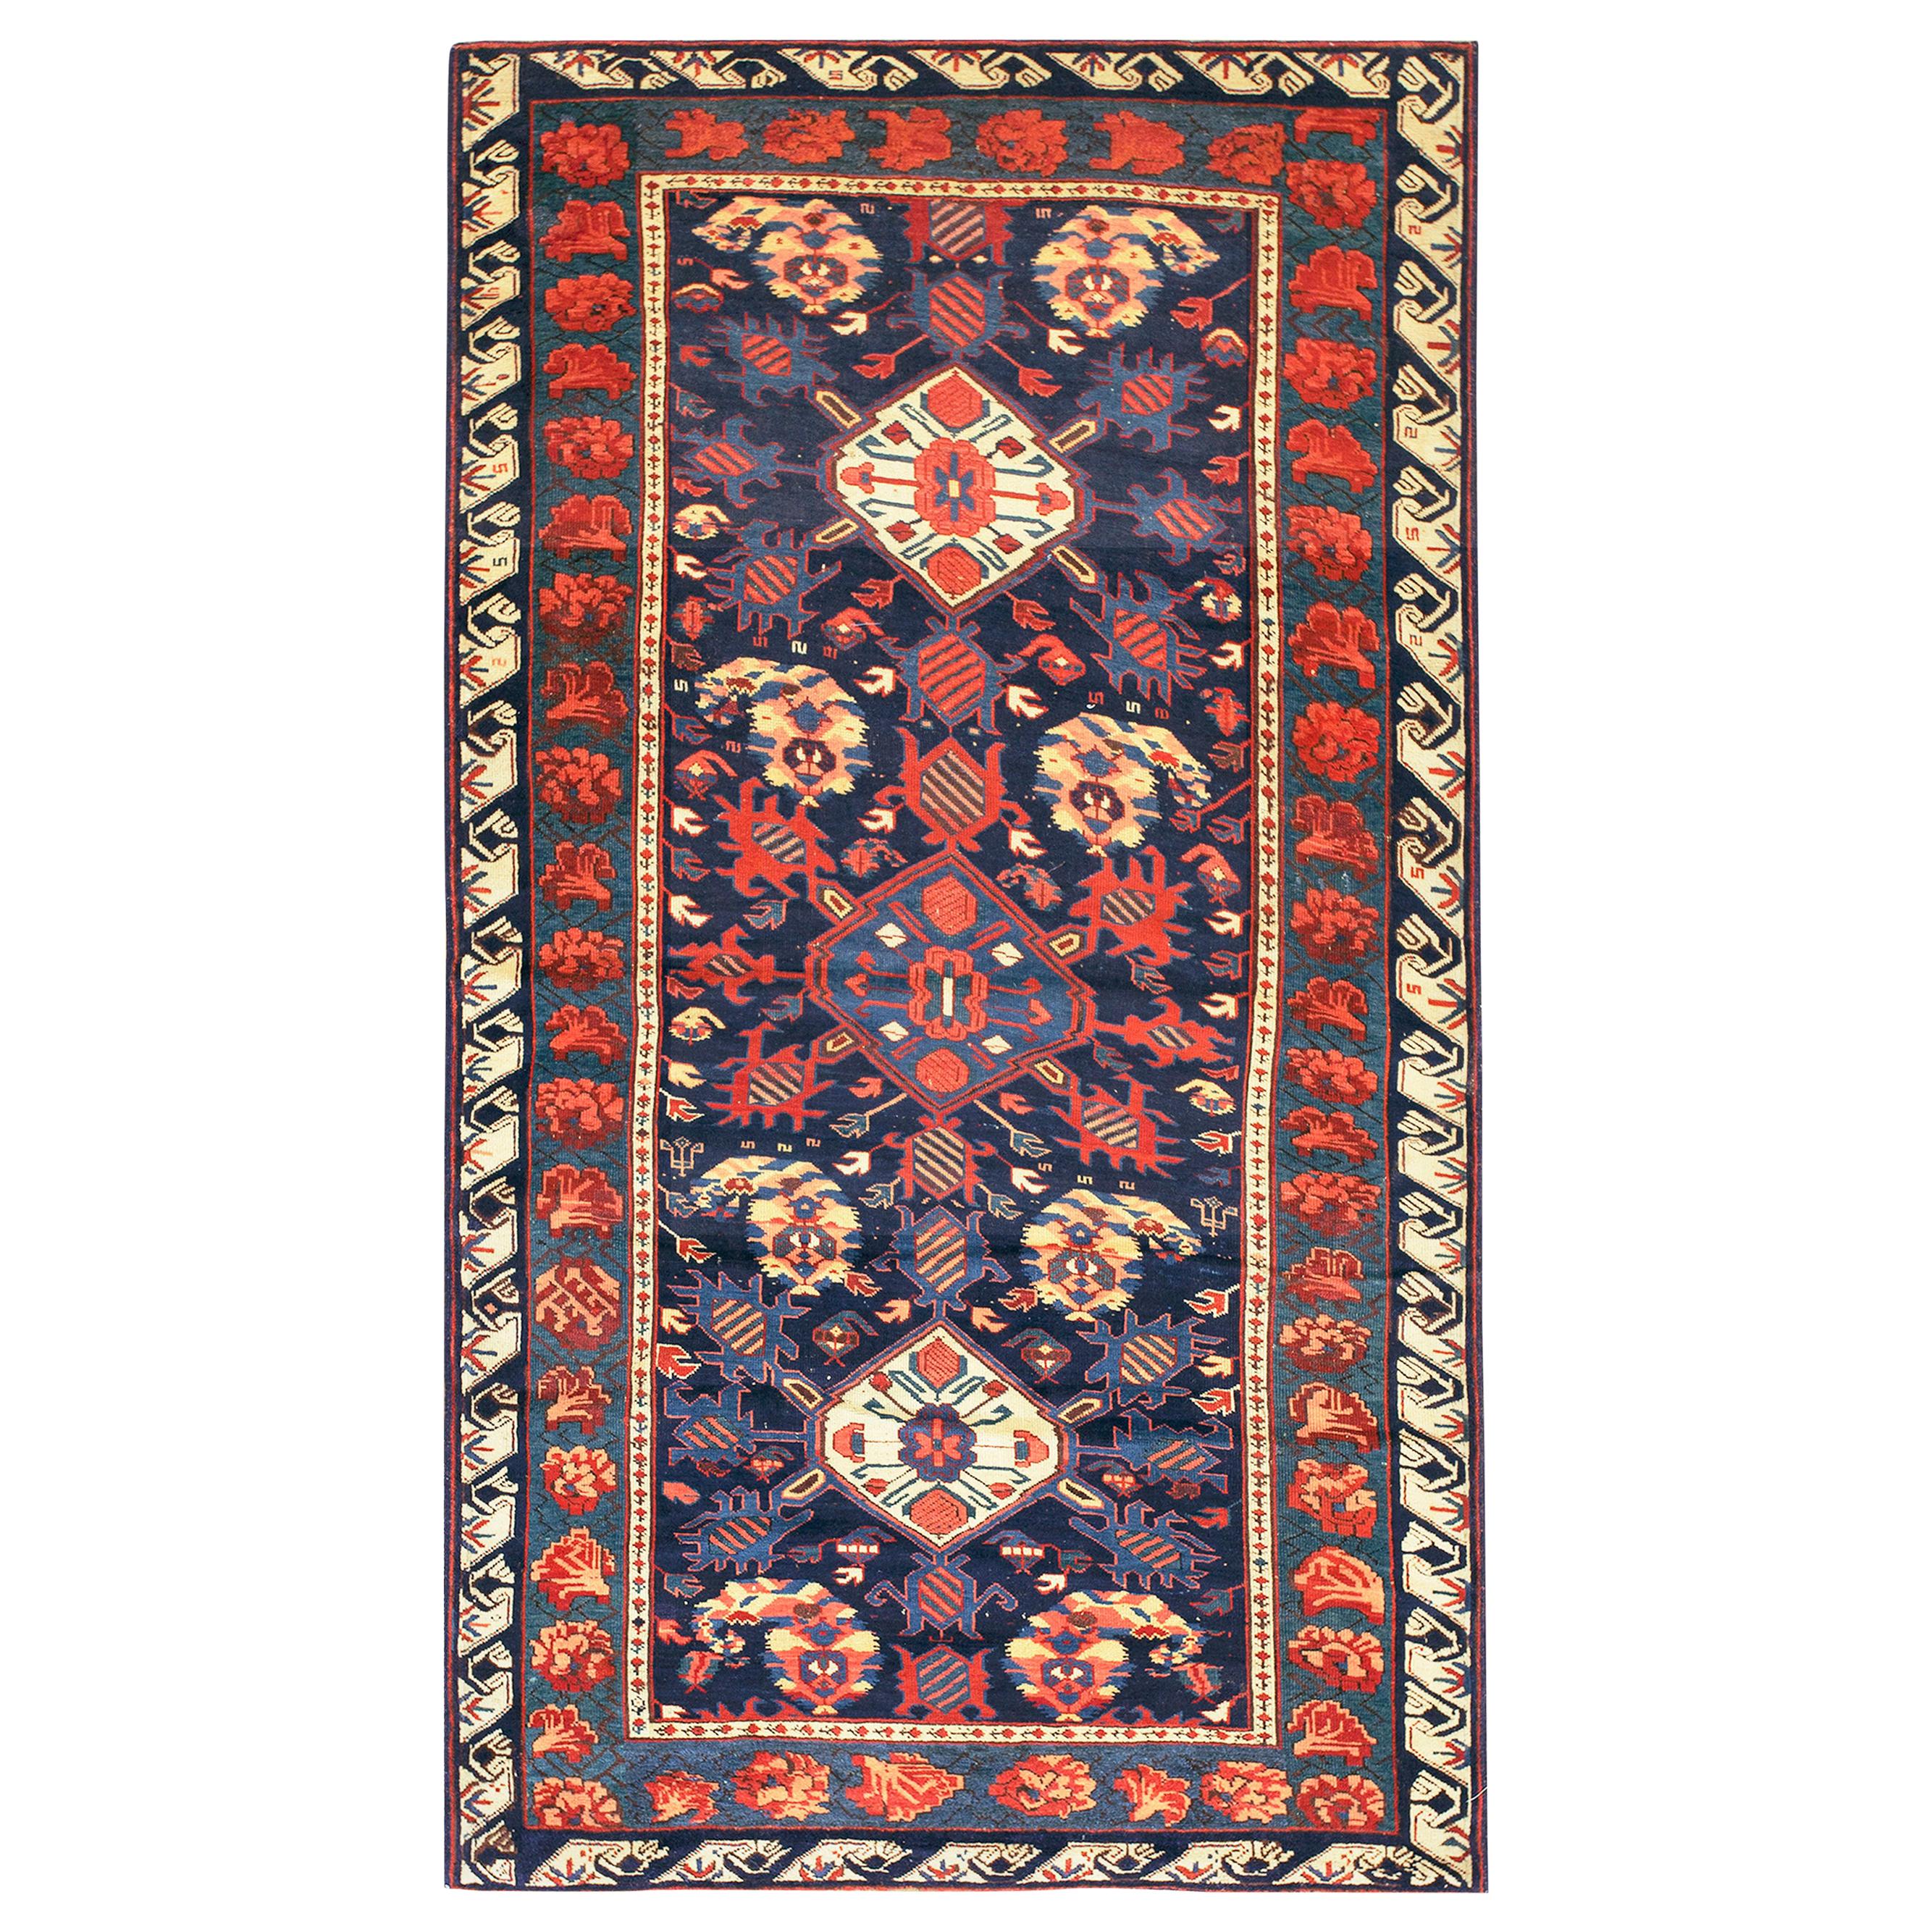 19th Century Caucasian Zeychor Carpet ( 4'2" x 7' - 127 x 213 ) For Sale